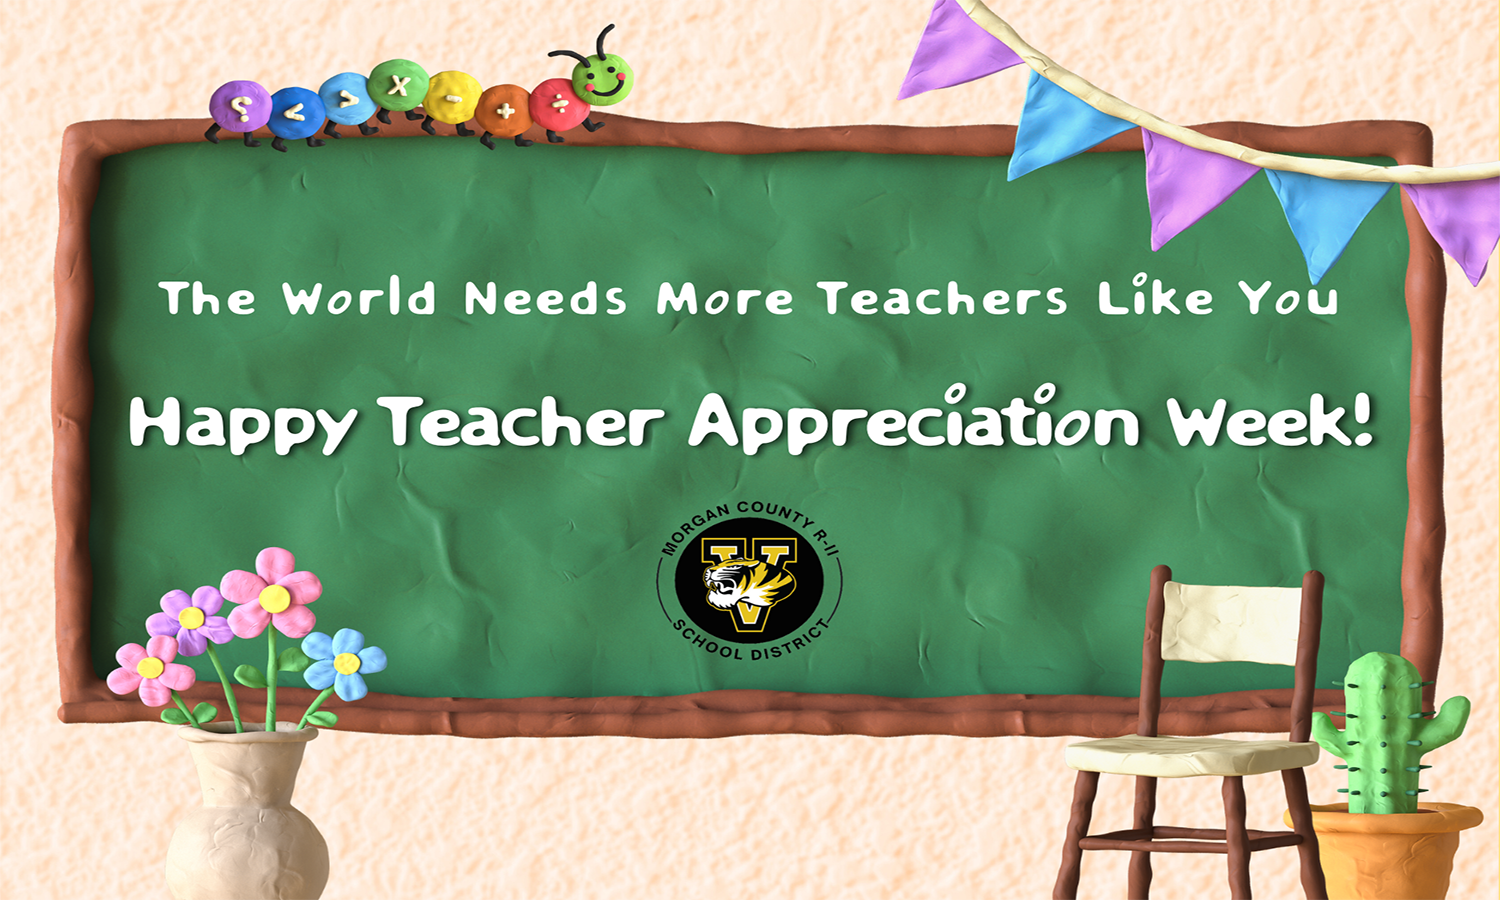 The World Needs More Teachers Like You - Happy Teacher Appreciation Week